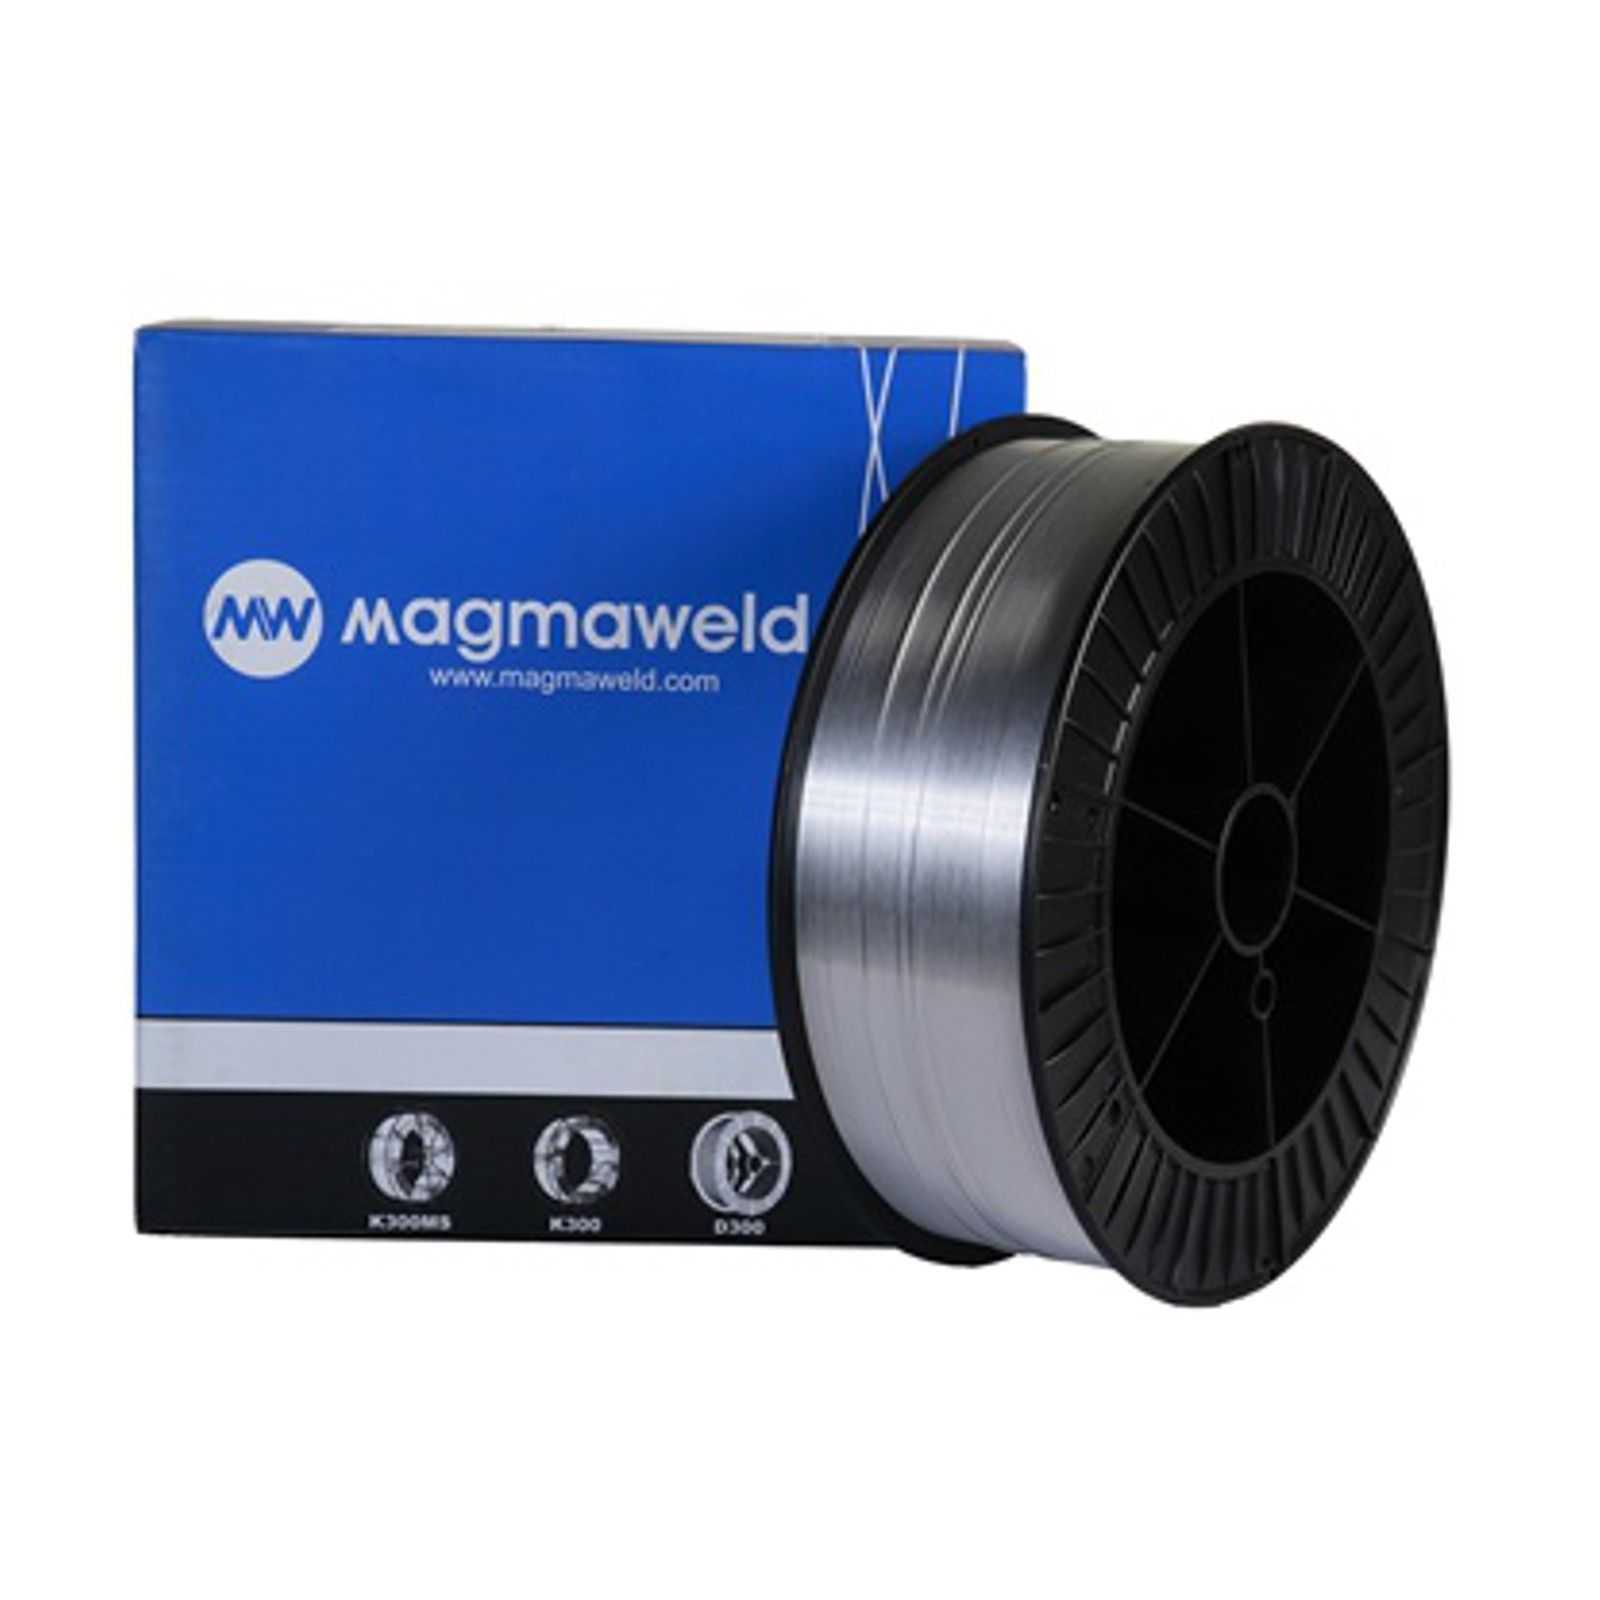 MAGMAWELD AWS 4043 AlSi 5 (3.2245) MIG Schweißdraht Aluminium Ø 1,2mm - 2,0 kg (D200 Spule) - 0040431202 -  -  - 43,65 € - 